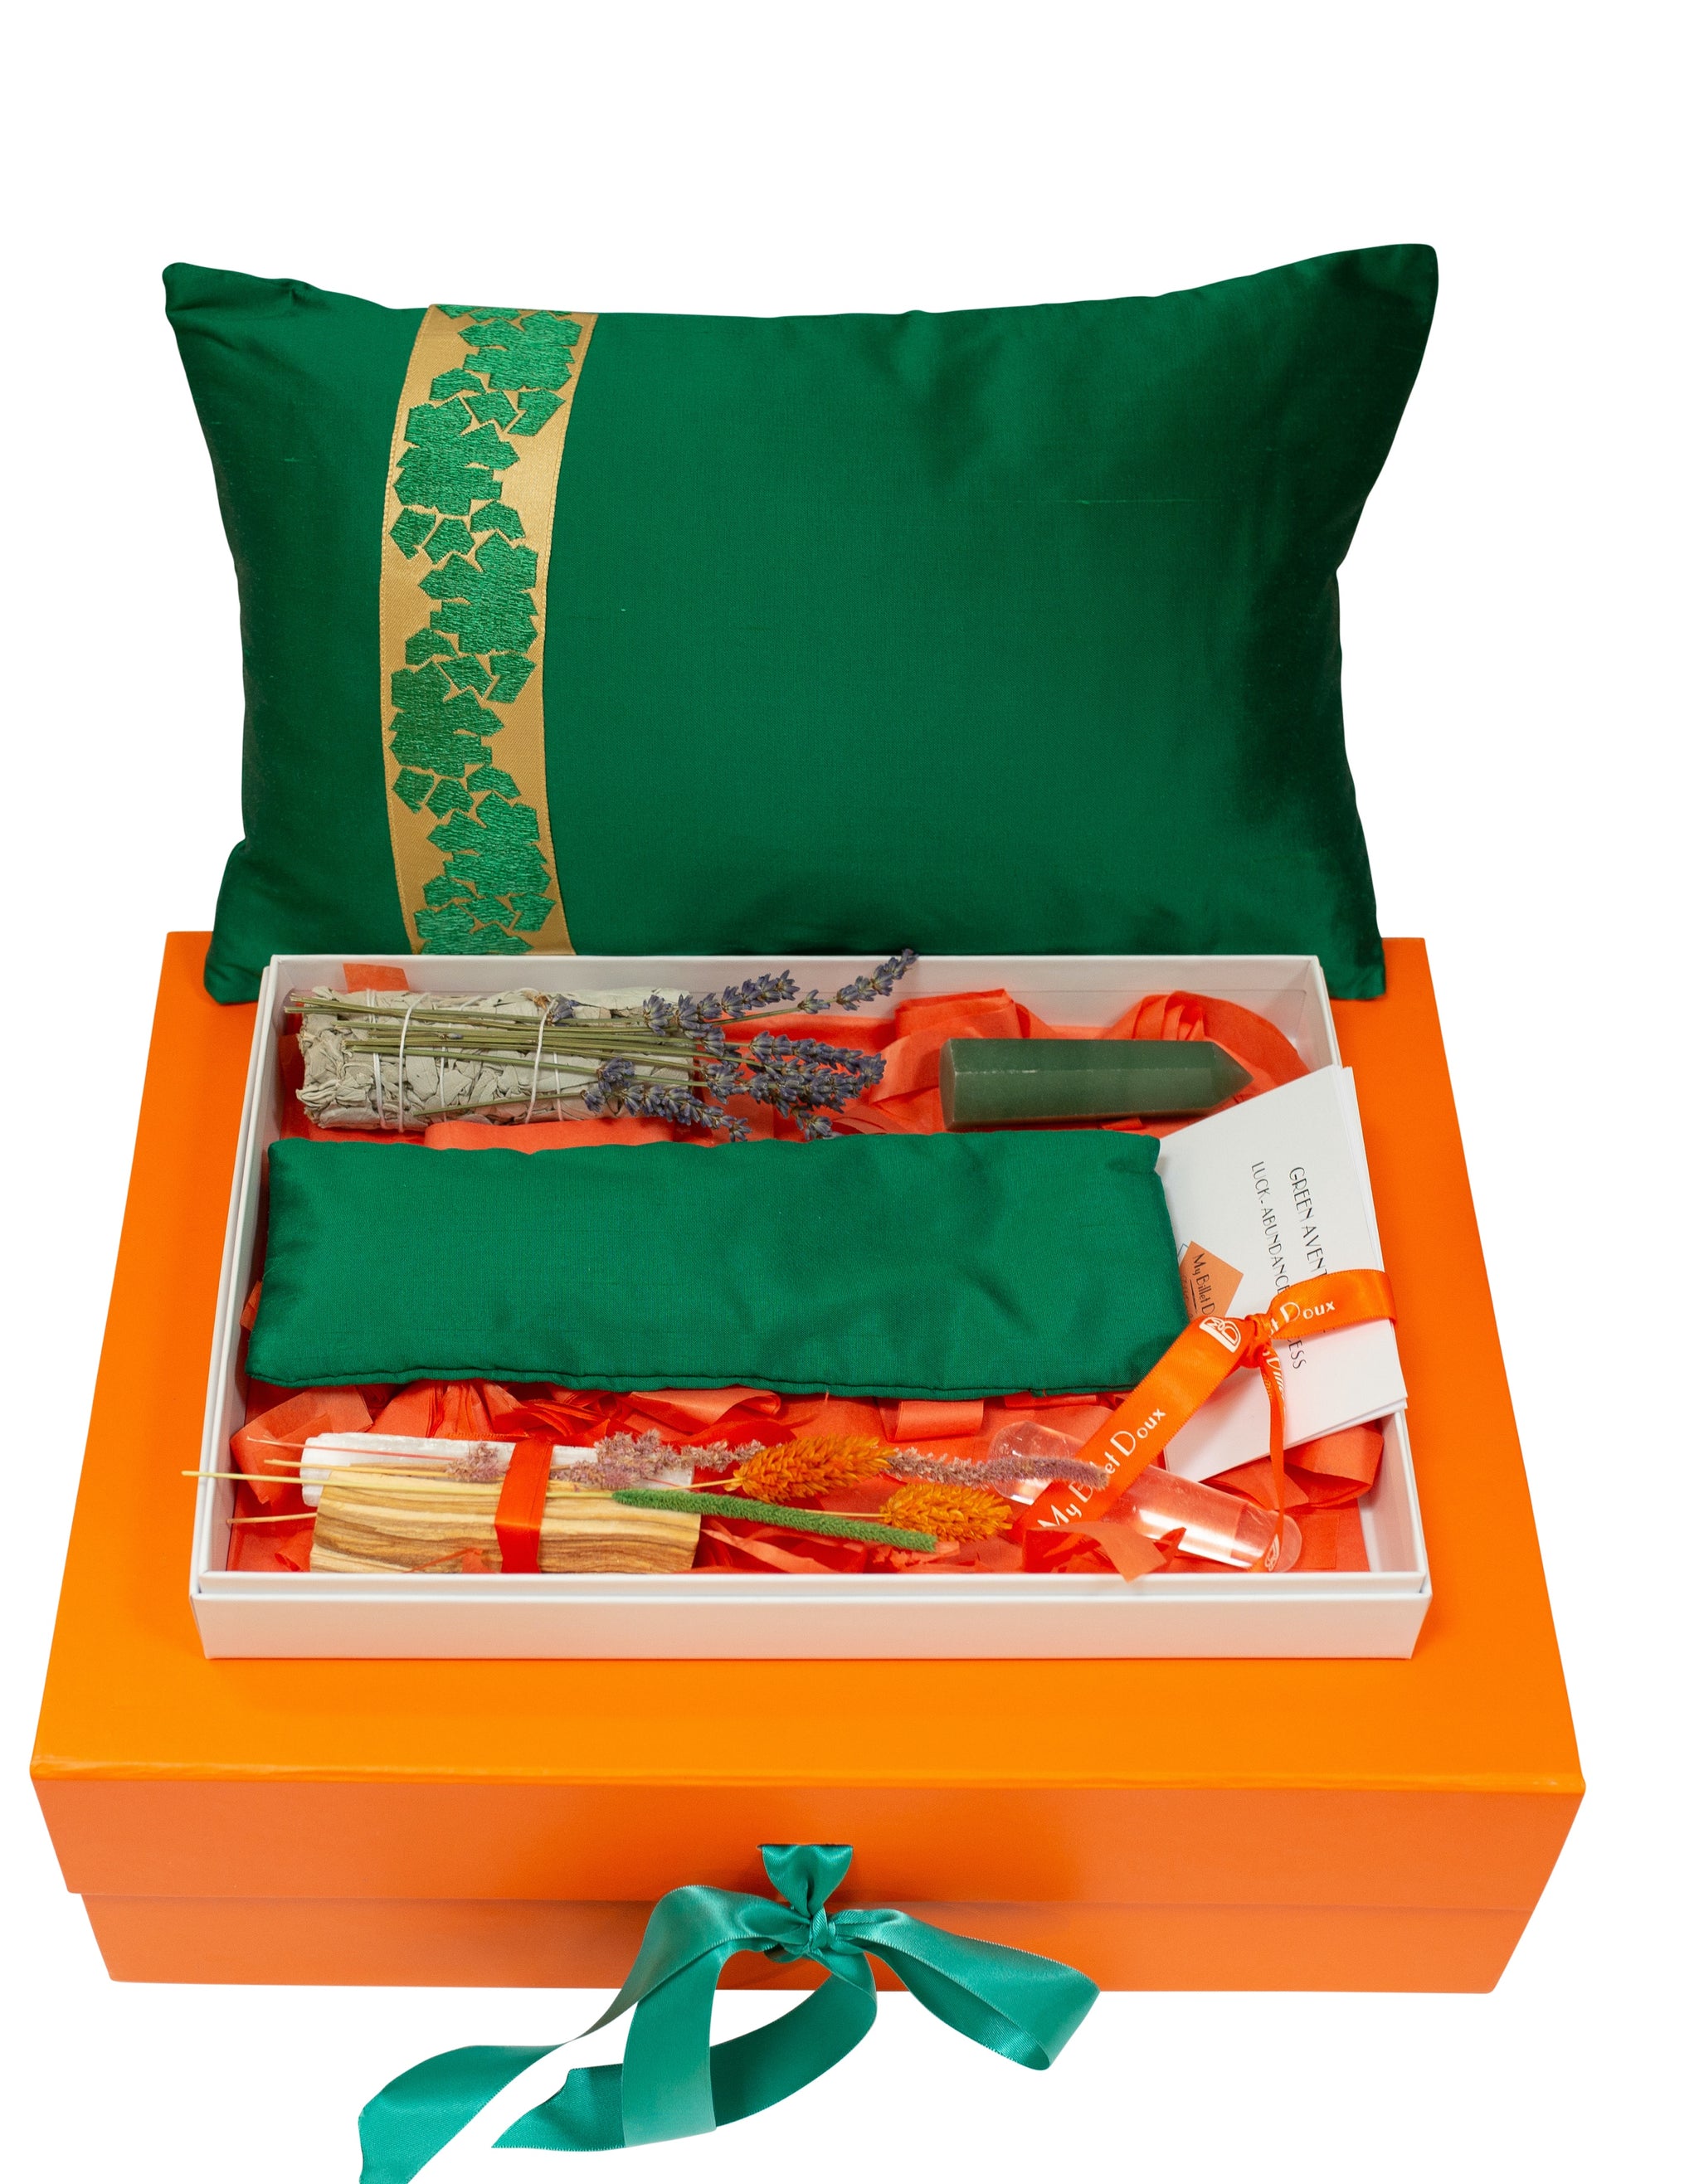 Rituel gift box  "Fragment" Bond green silk cushion set with green aventurine